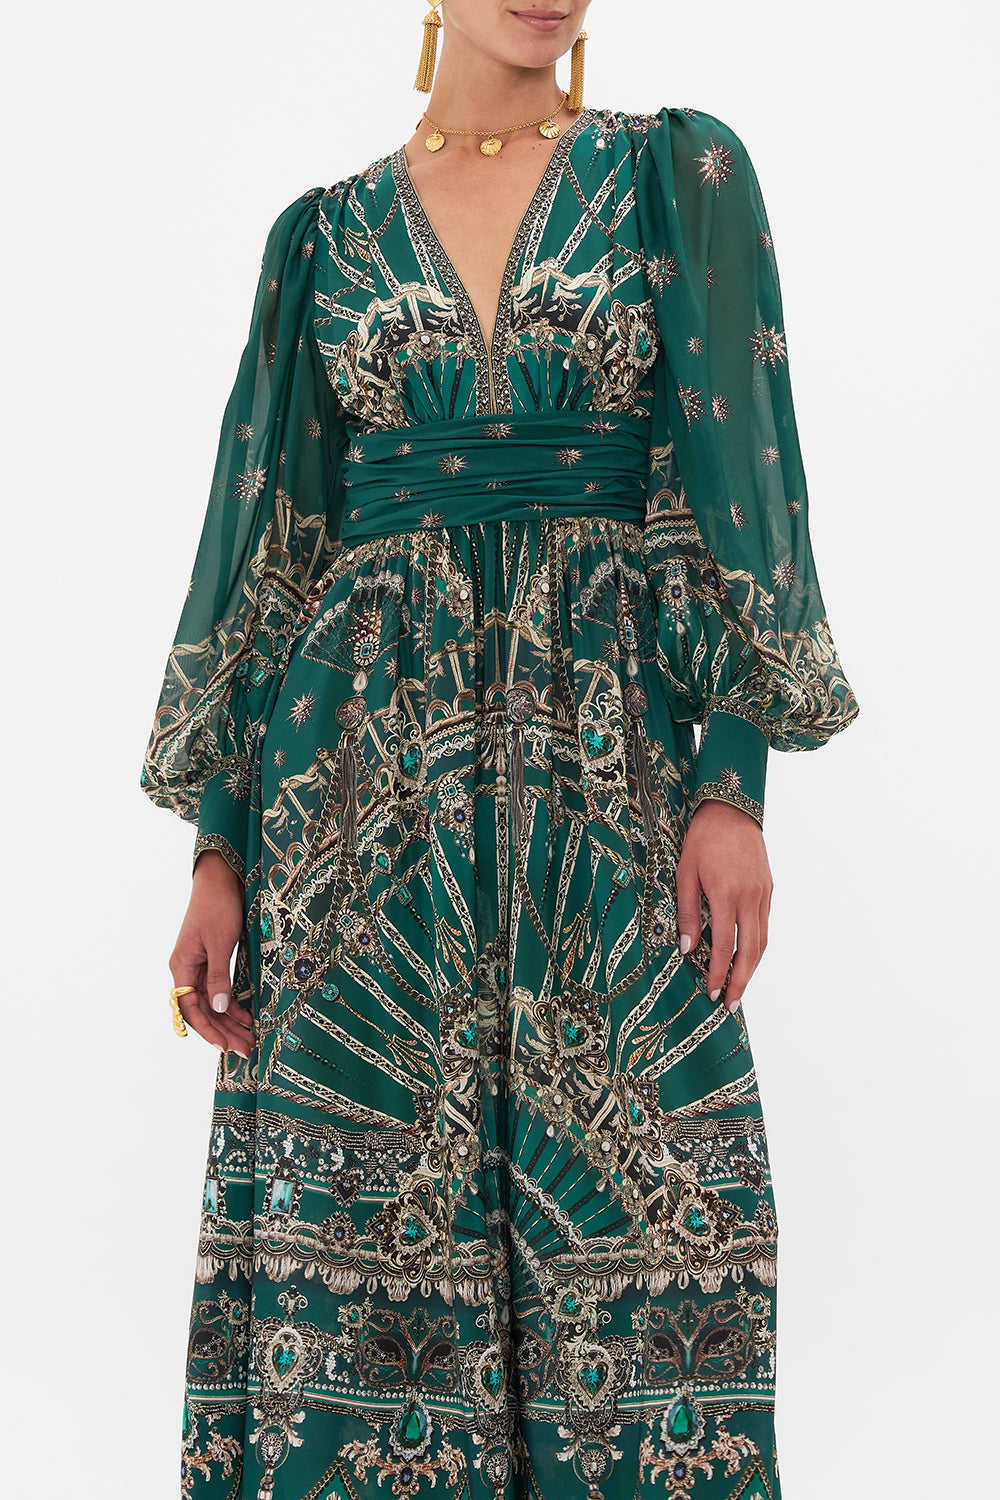 Crop view of model wearing CAMILLA Long Silk Dress in A Venice Veil print